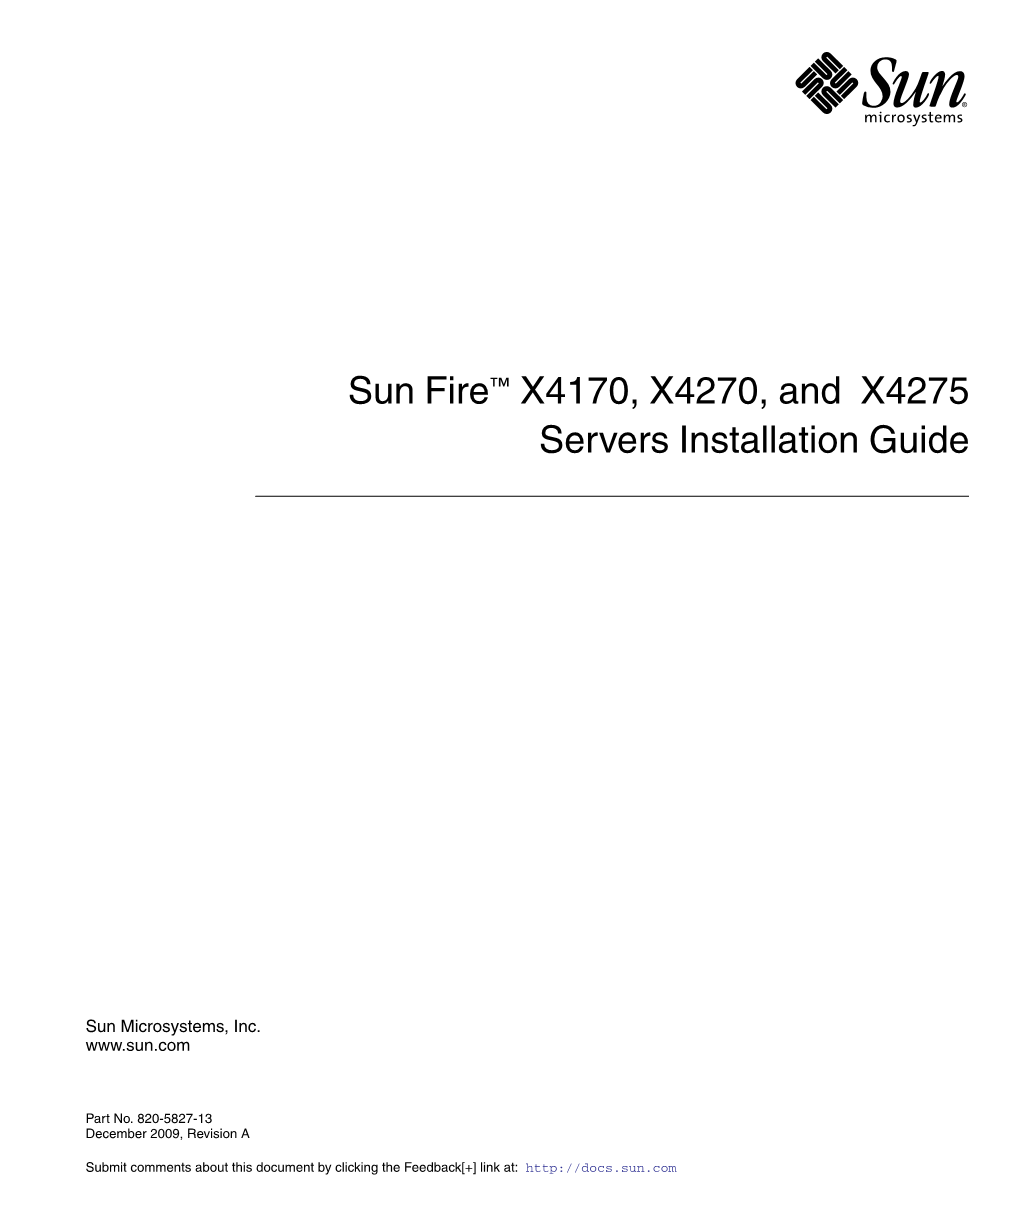 Sun Fire X4170, X4270, and X4275 Servers